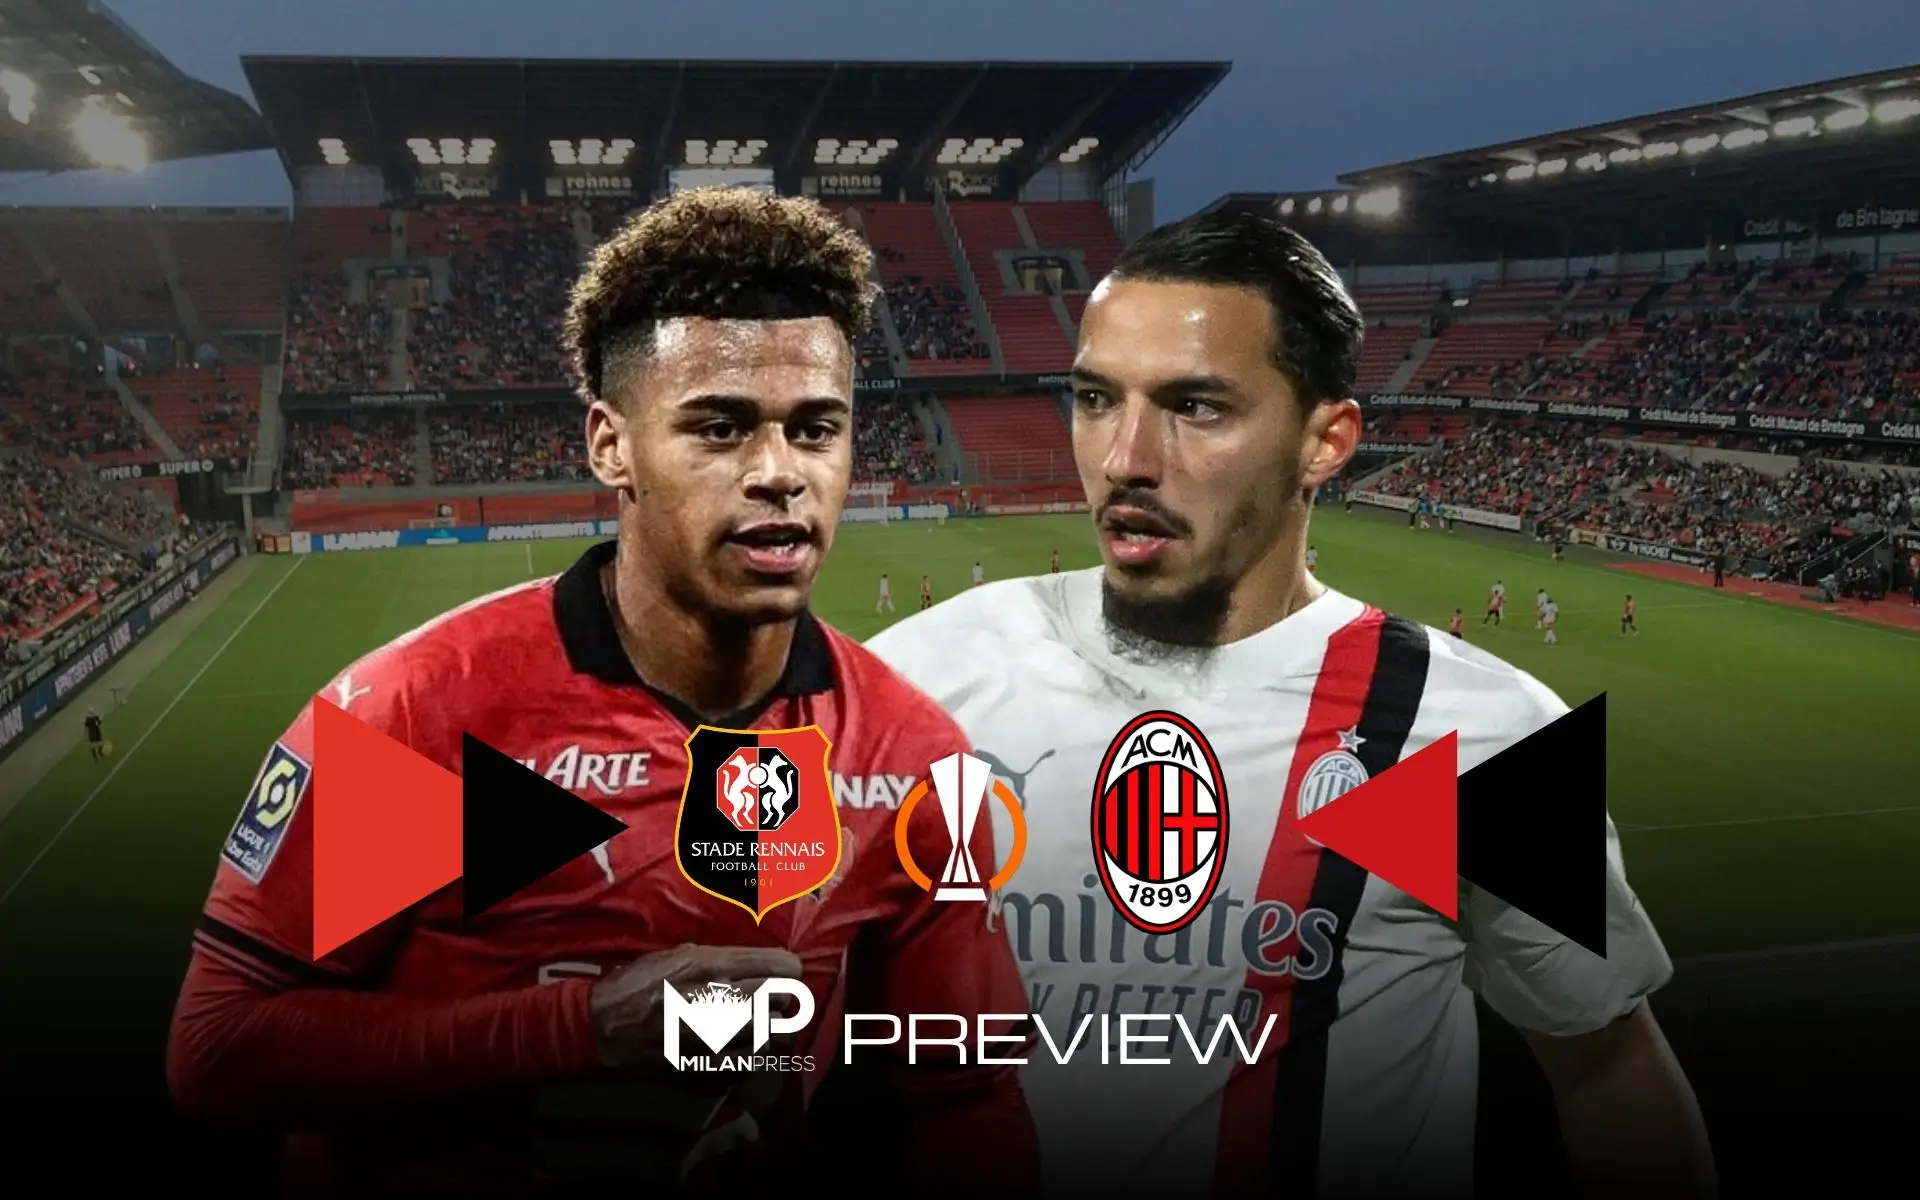 Rennes-Milan Europa League Preview - MilanPress, robe dell'altro diavolo